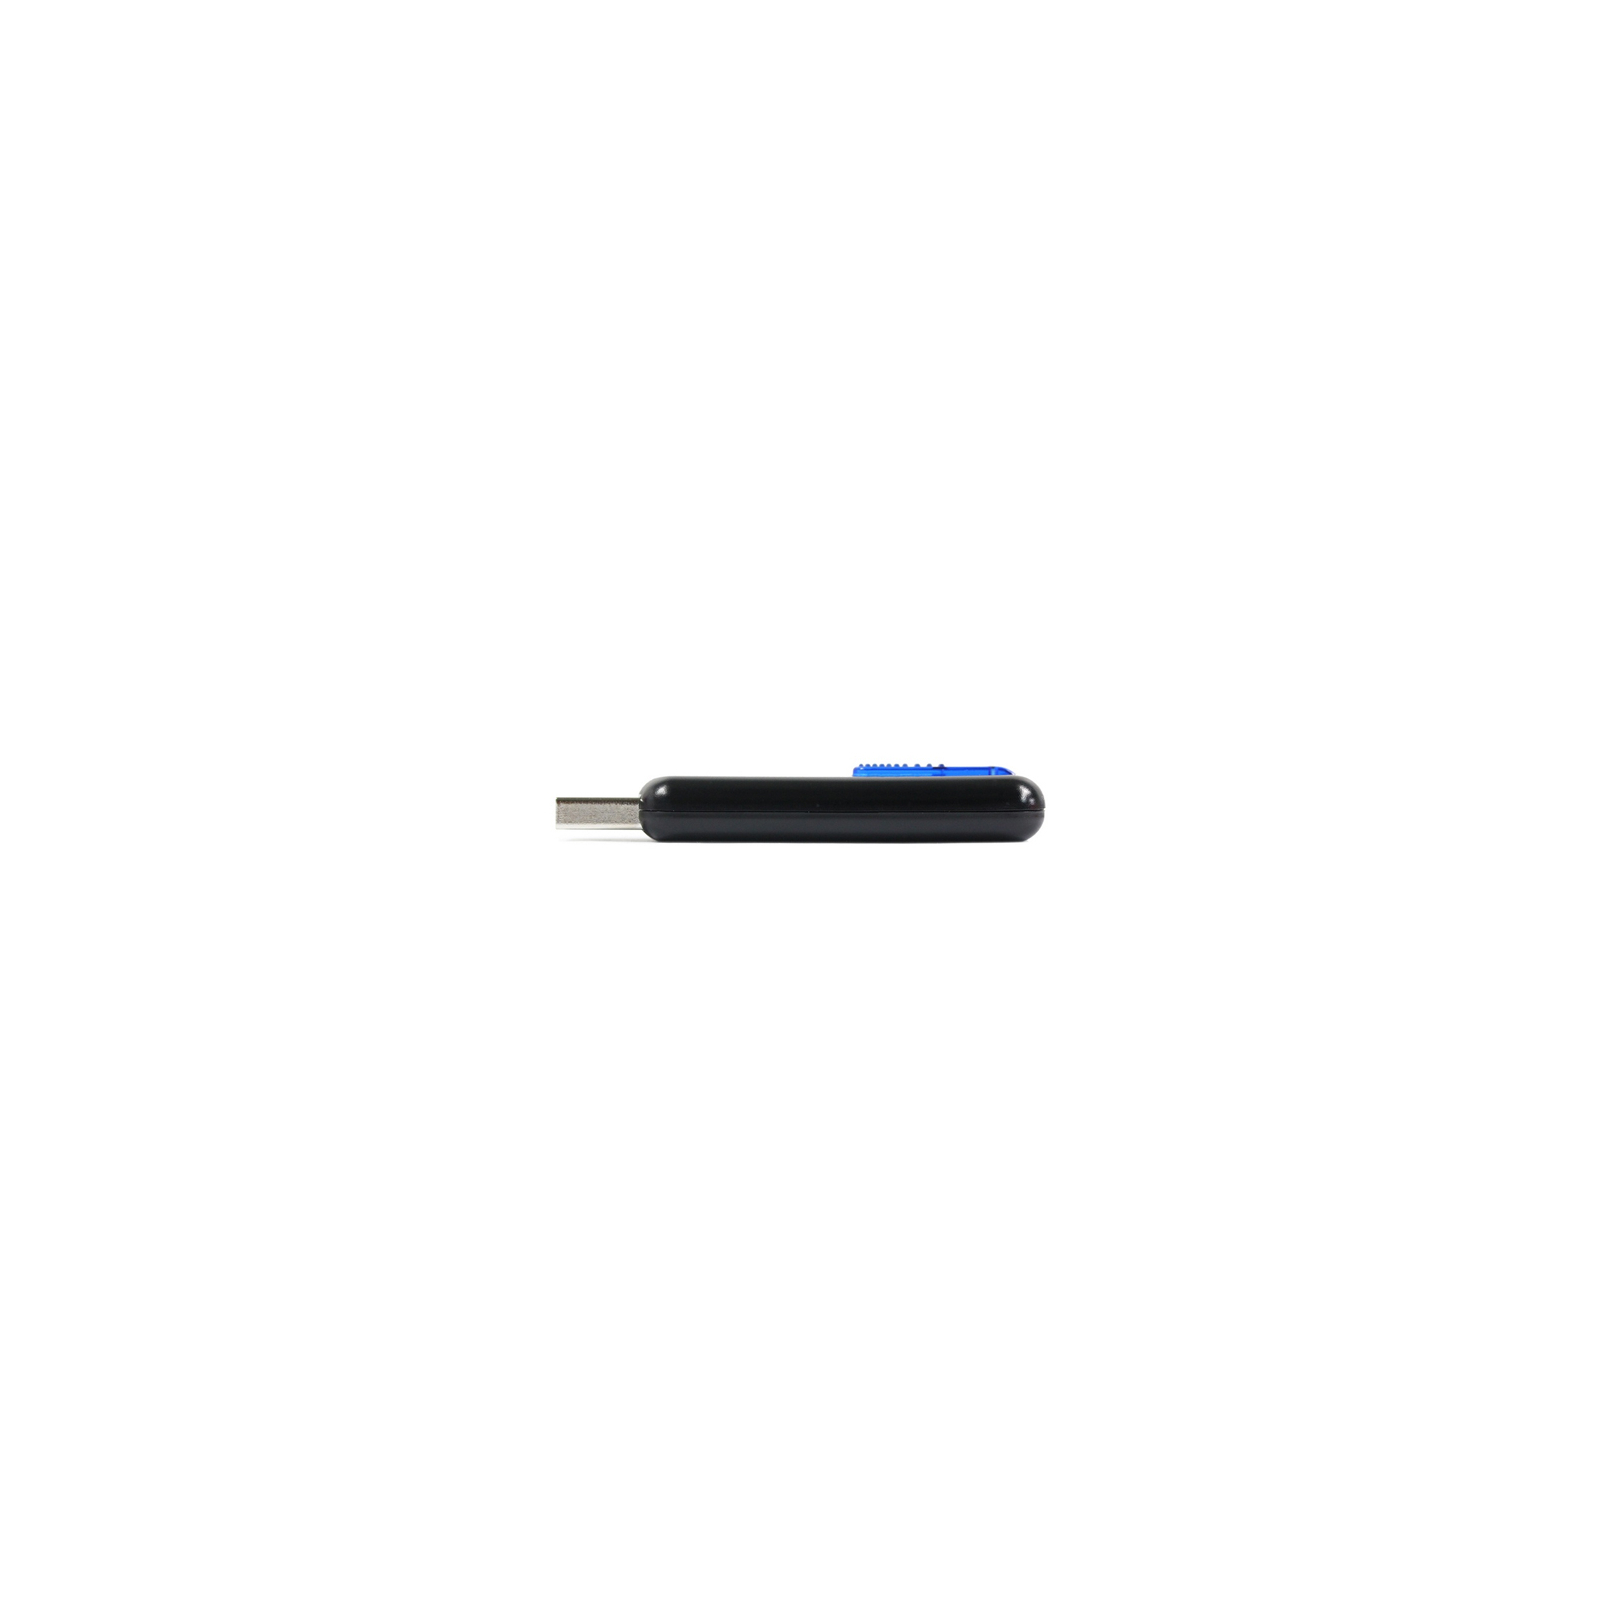 USB флеш накопитель Apacer 16GB AH354 Black RP USB3.0 (AP16GAH354B-1) изображение 4